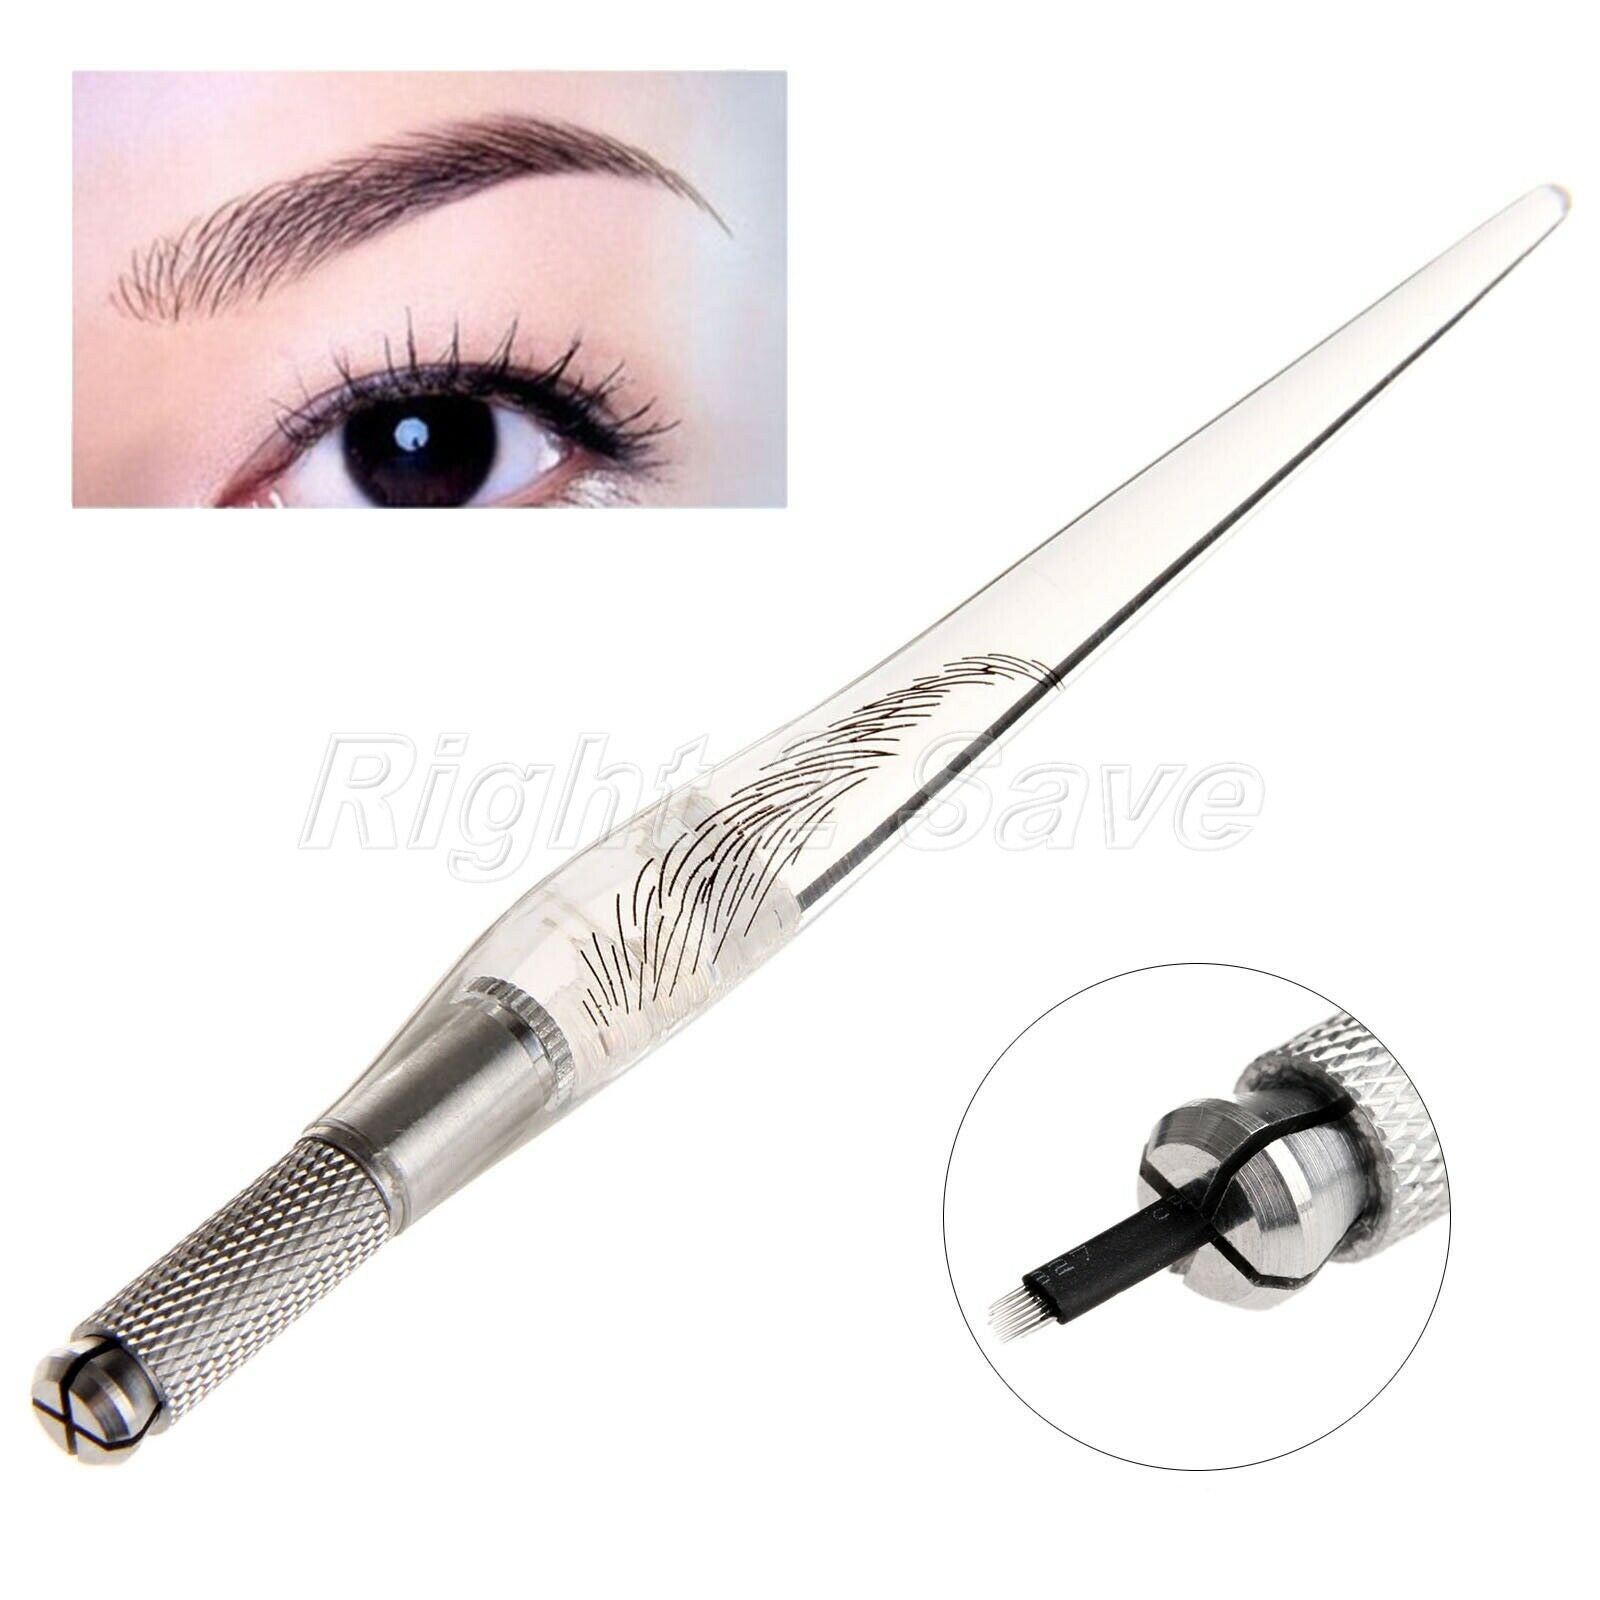 5.79 Inch Manual Tattoo Pen Professional Durable Permanent Eyebrow Makeup Tool